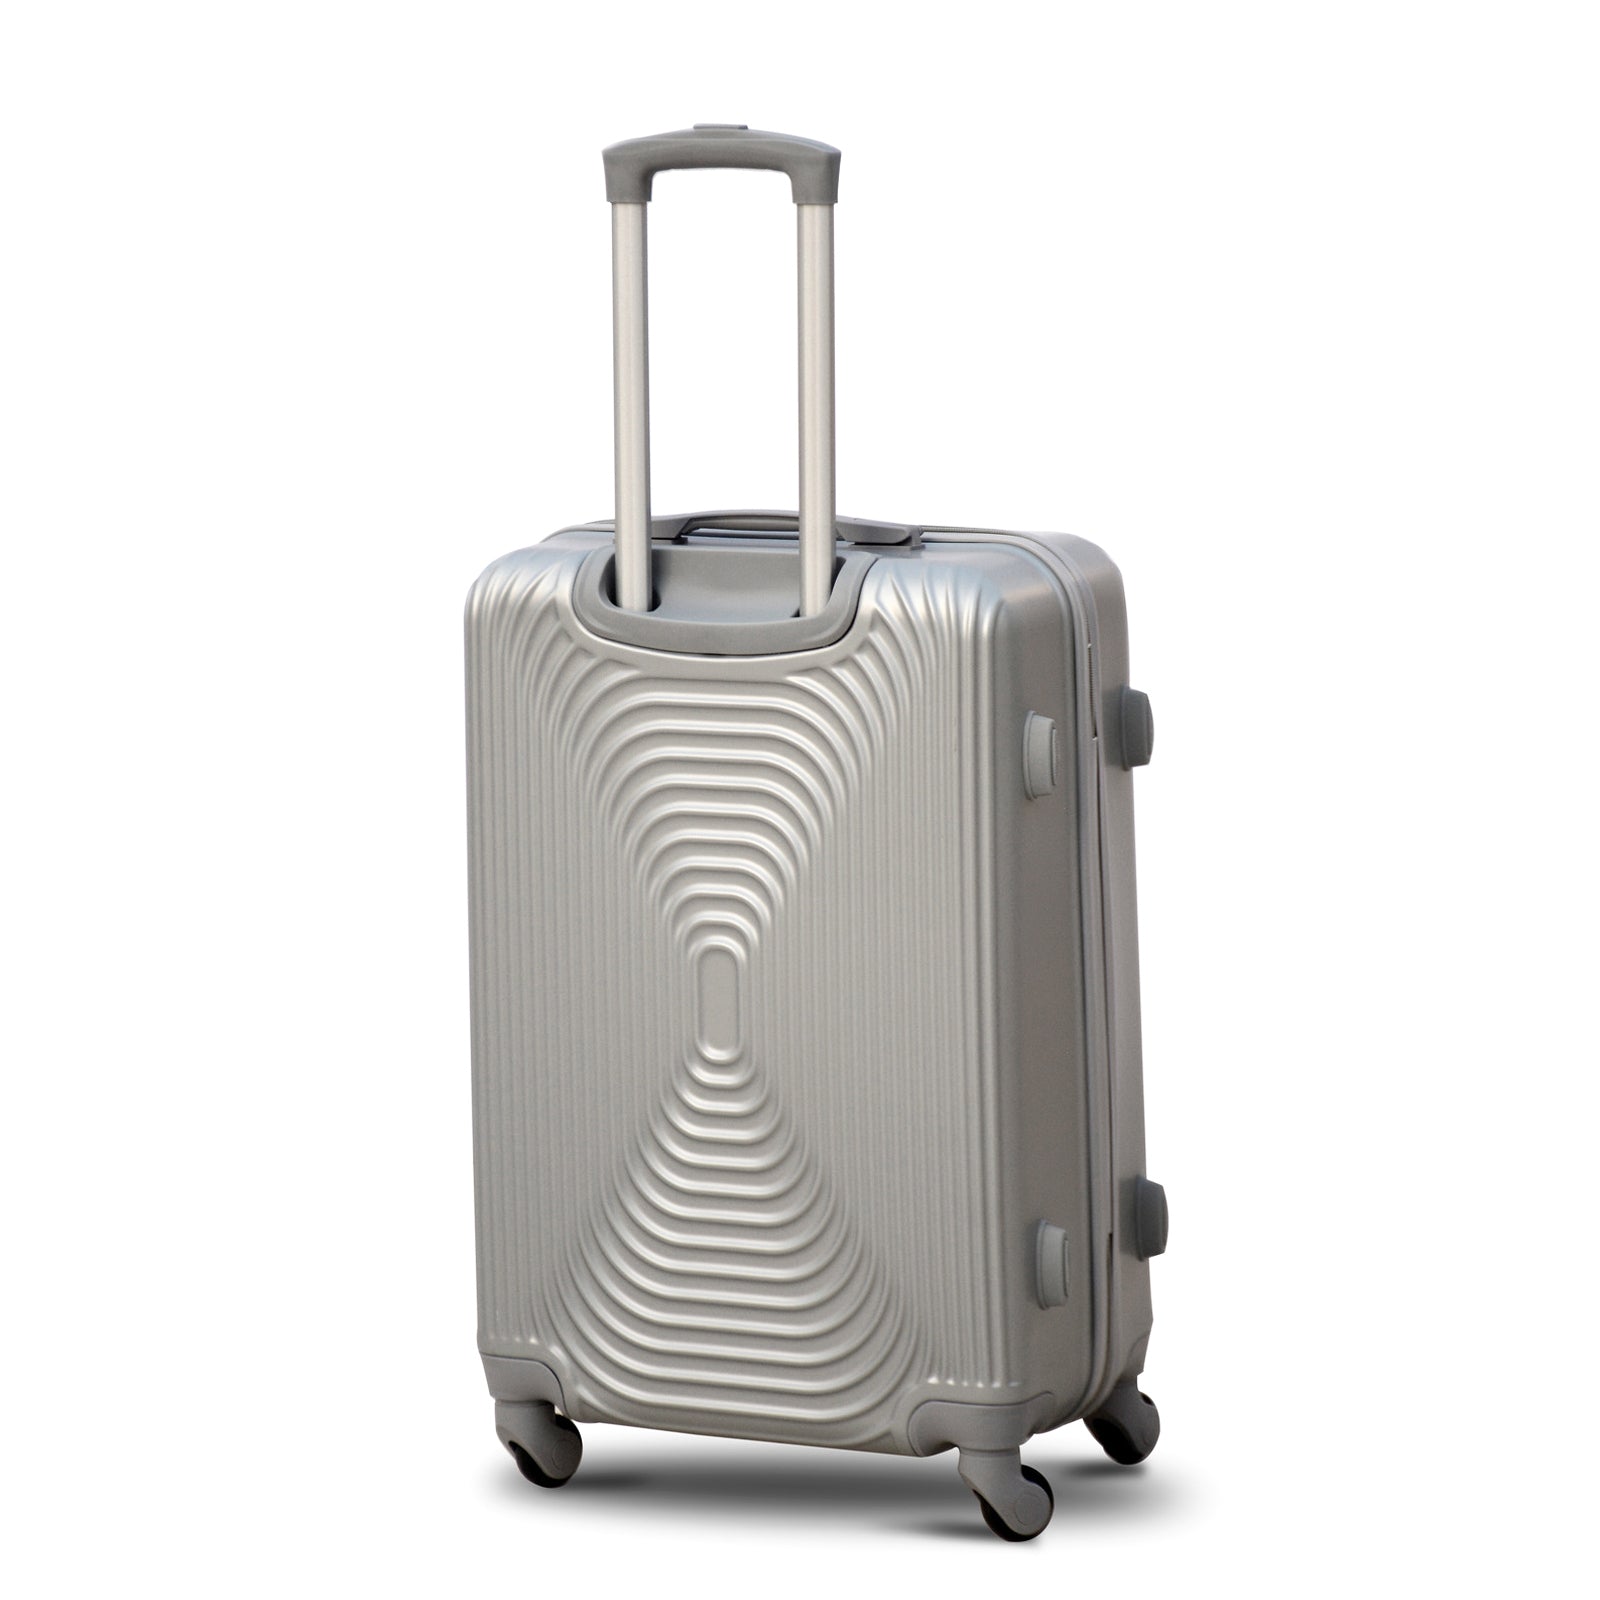 32 Inches Silver Fashion ABS Luggage Lightweight Hard Case Trolley Bag zaappy.com